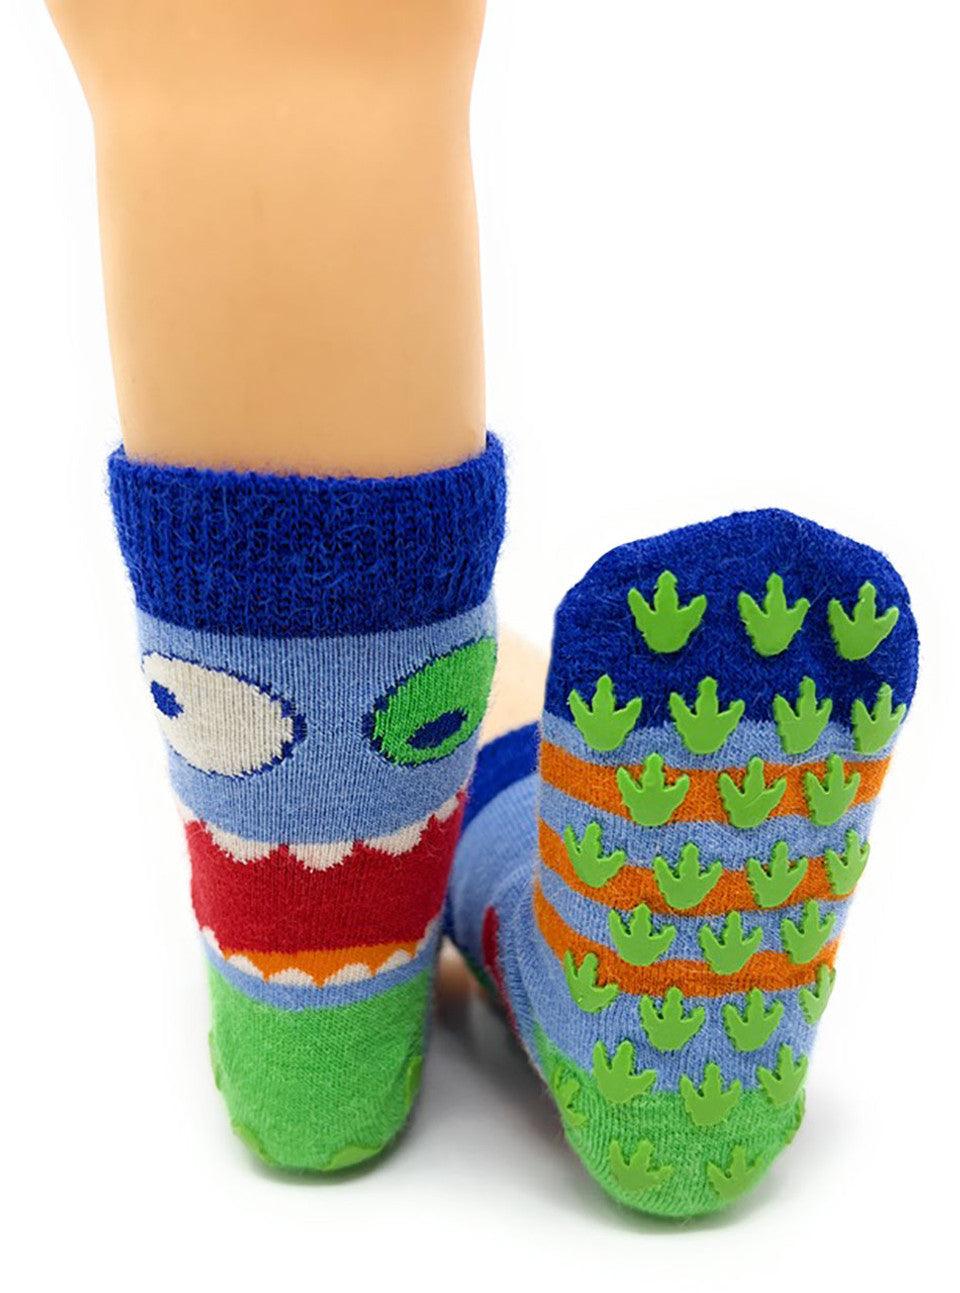 Monster Alpaca Non-Skid Socks - Warrior Alpaca - The Sock Monster